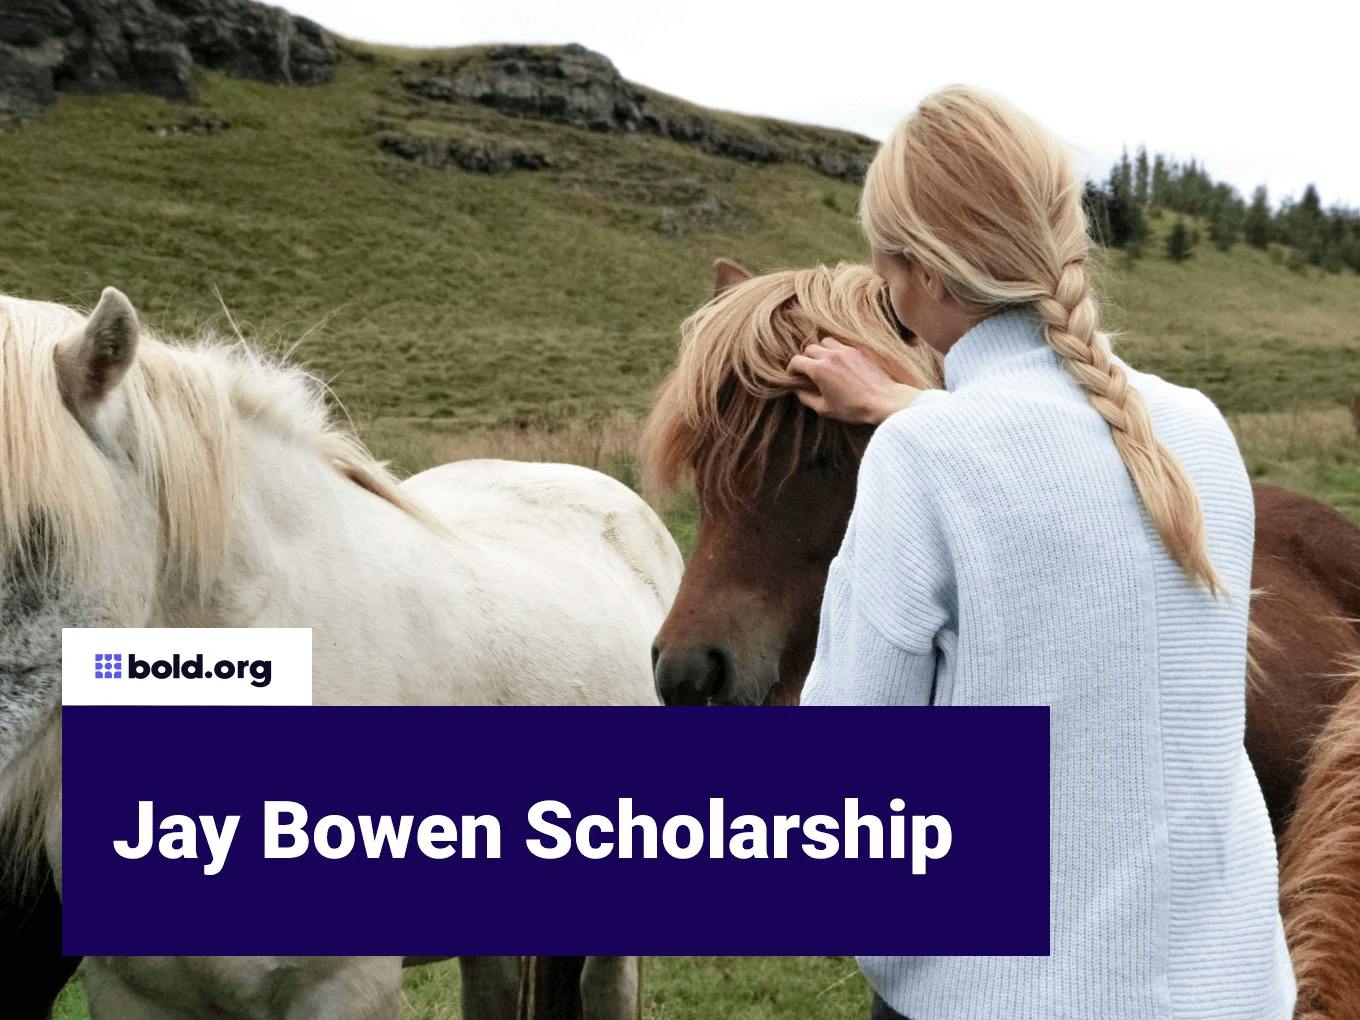 Jay Bowen Scholarship